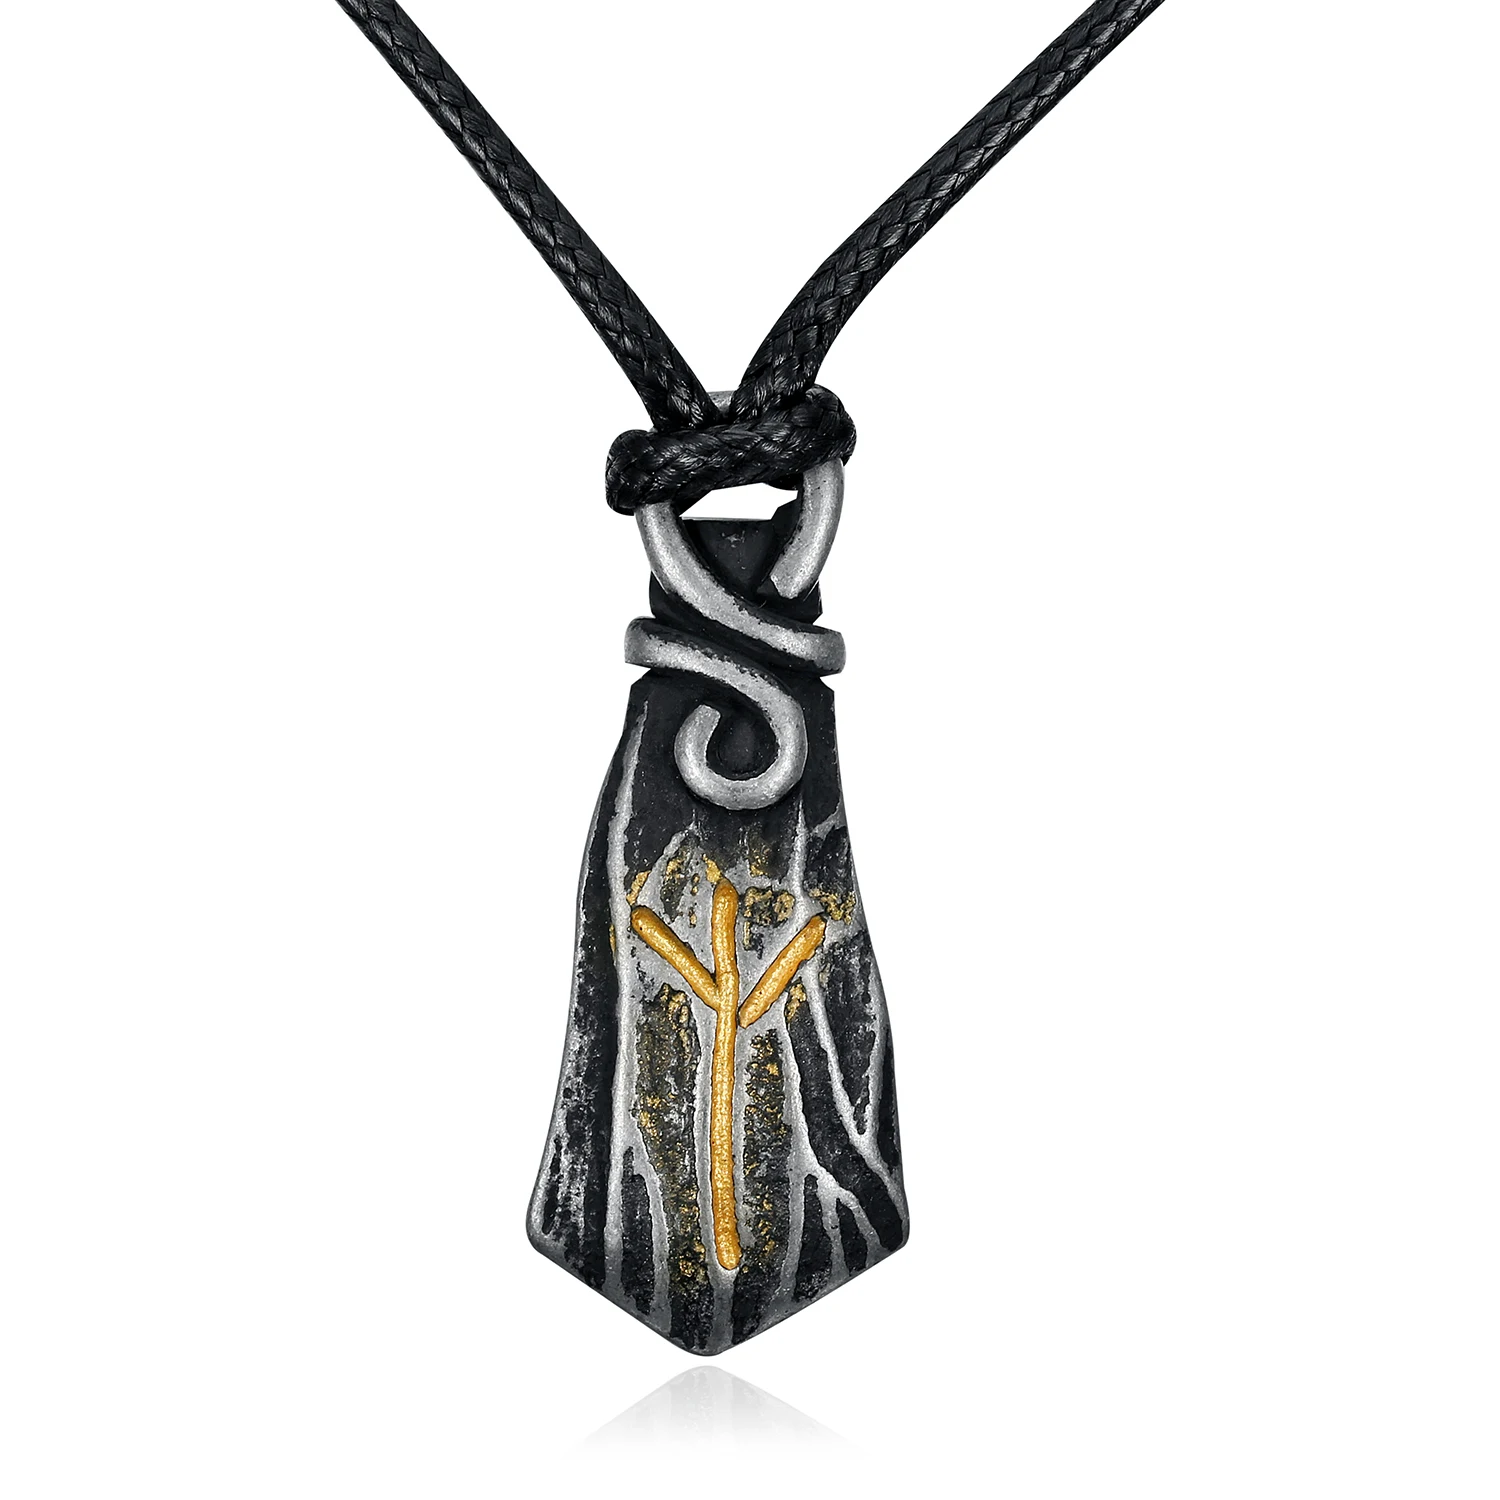 Jewelrox-collar - Buy Viking Collar,Pagano Collar,Nórdicos Product on Alibaba.com